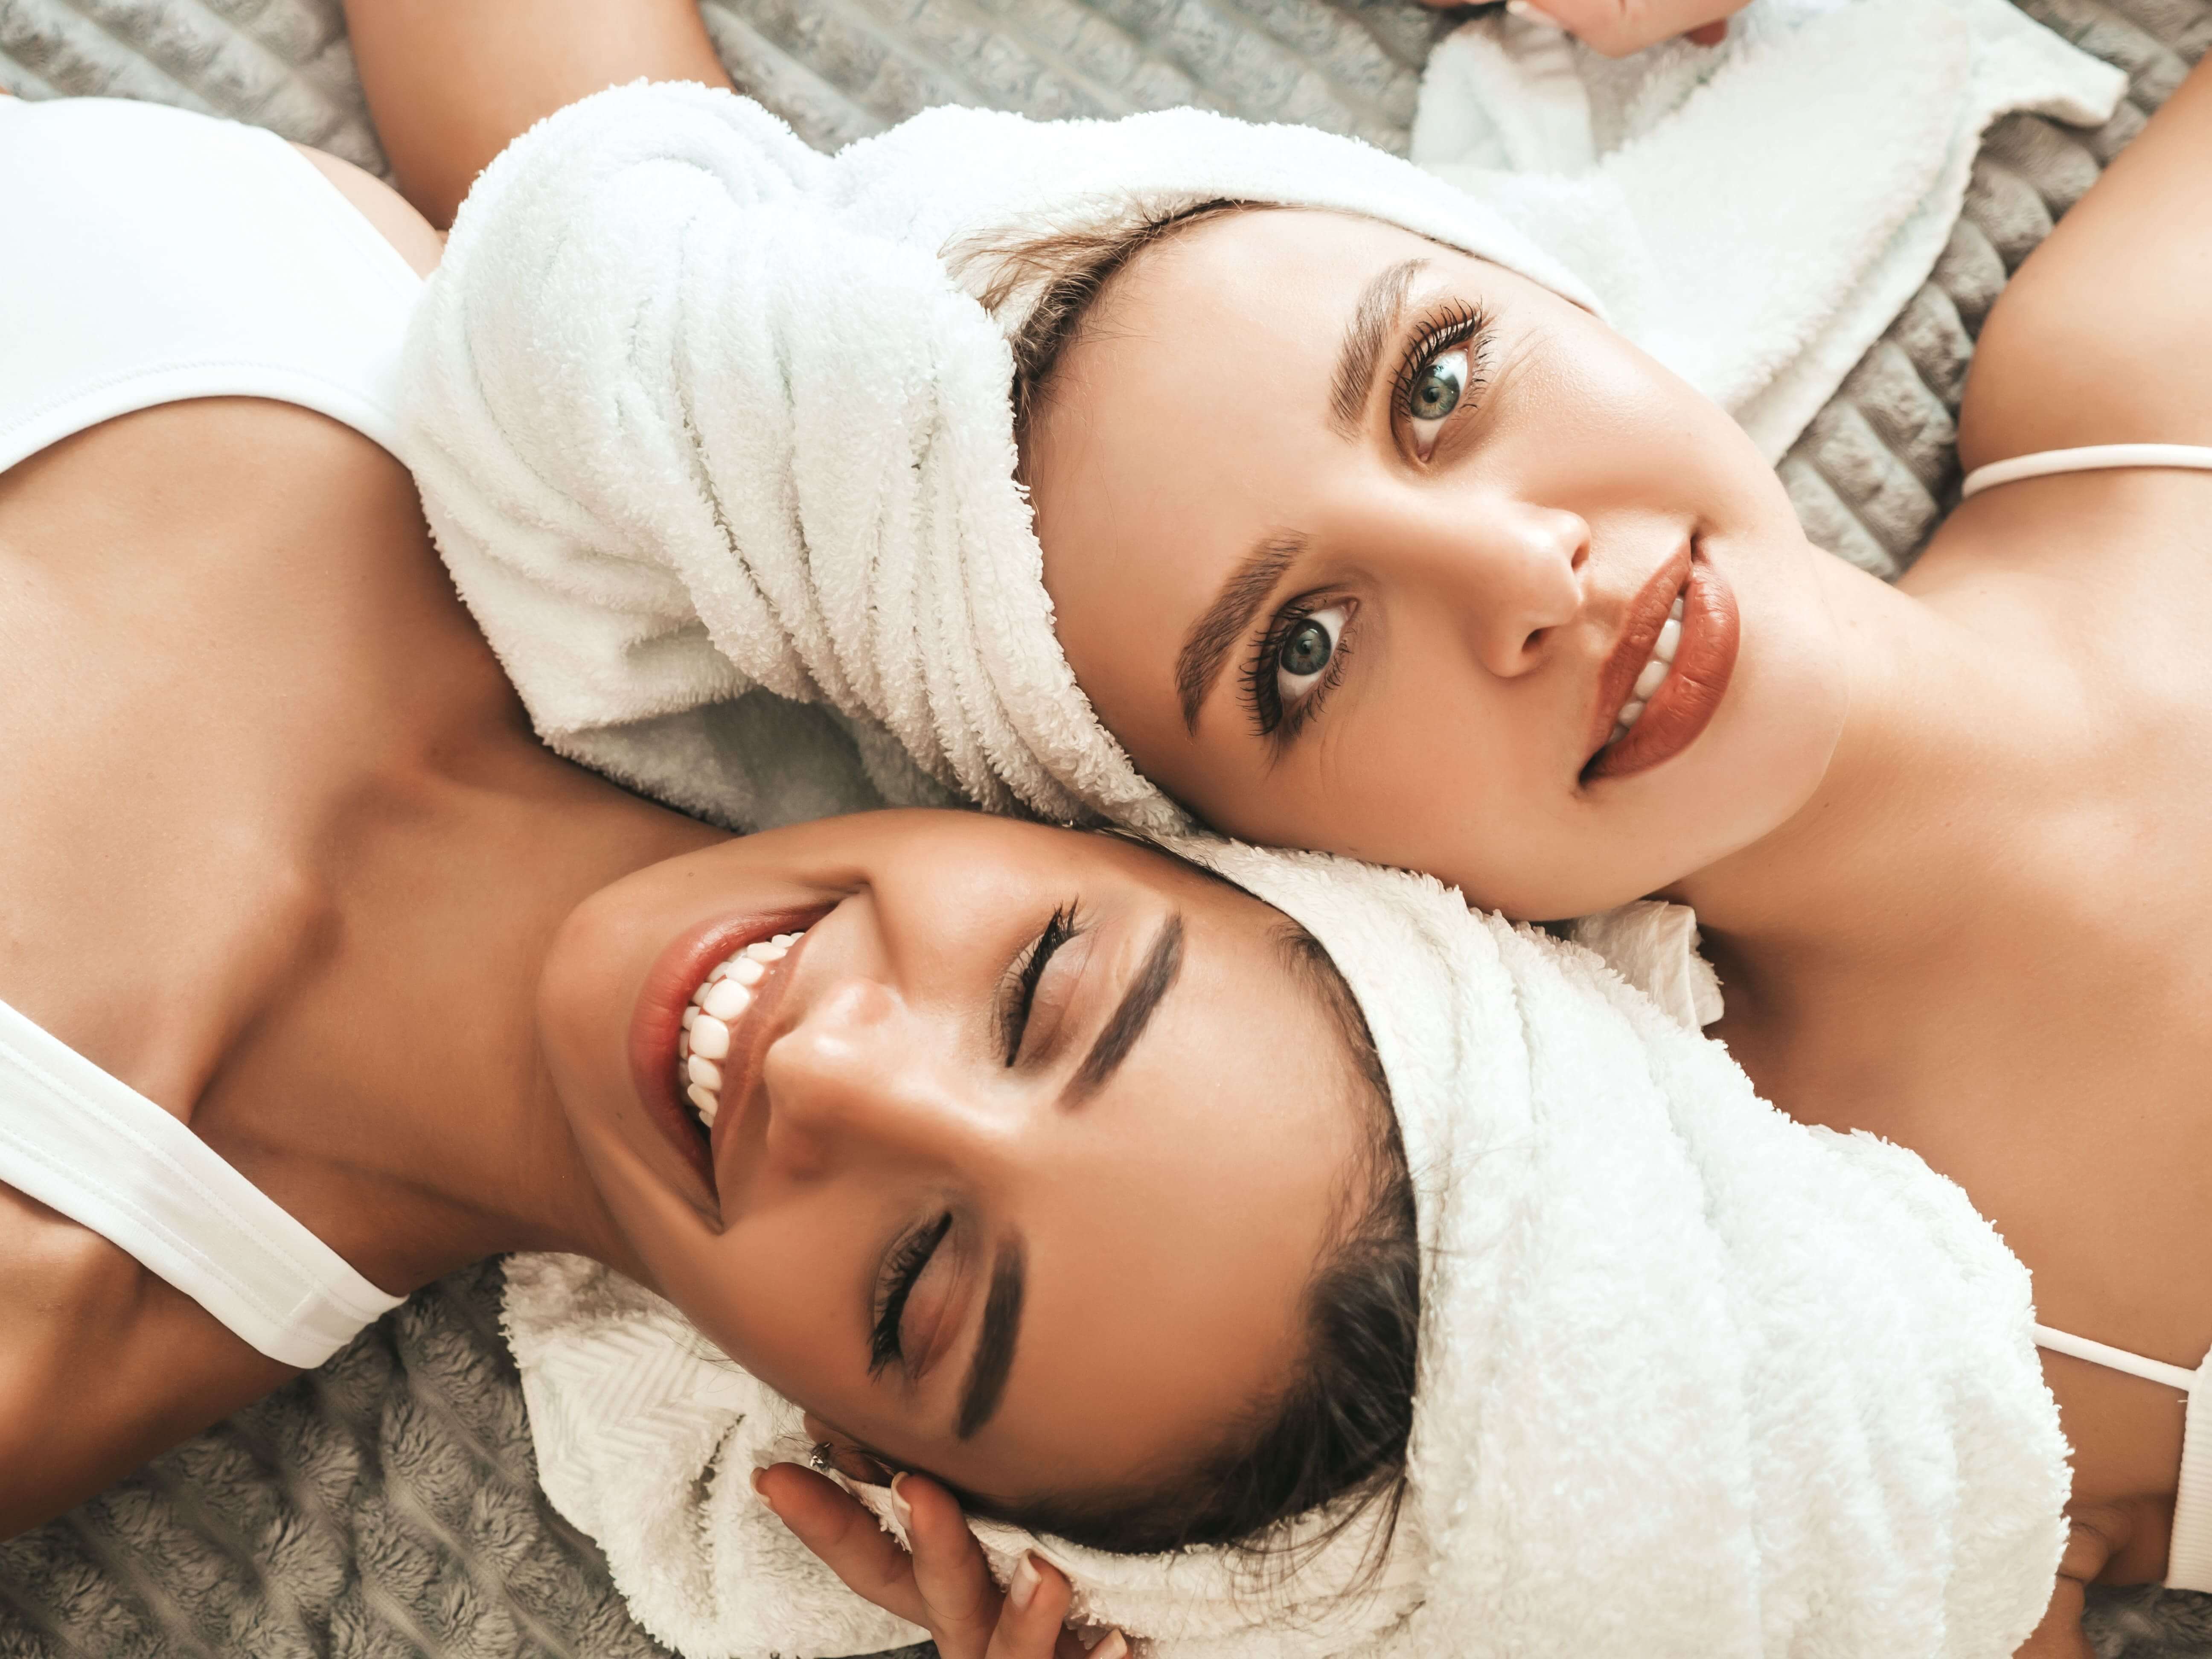 two young beautiful smiling women white bathrobes towels head min